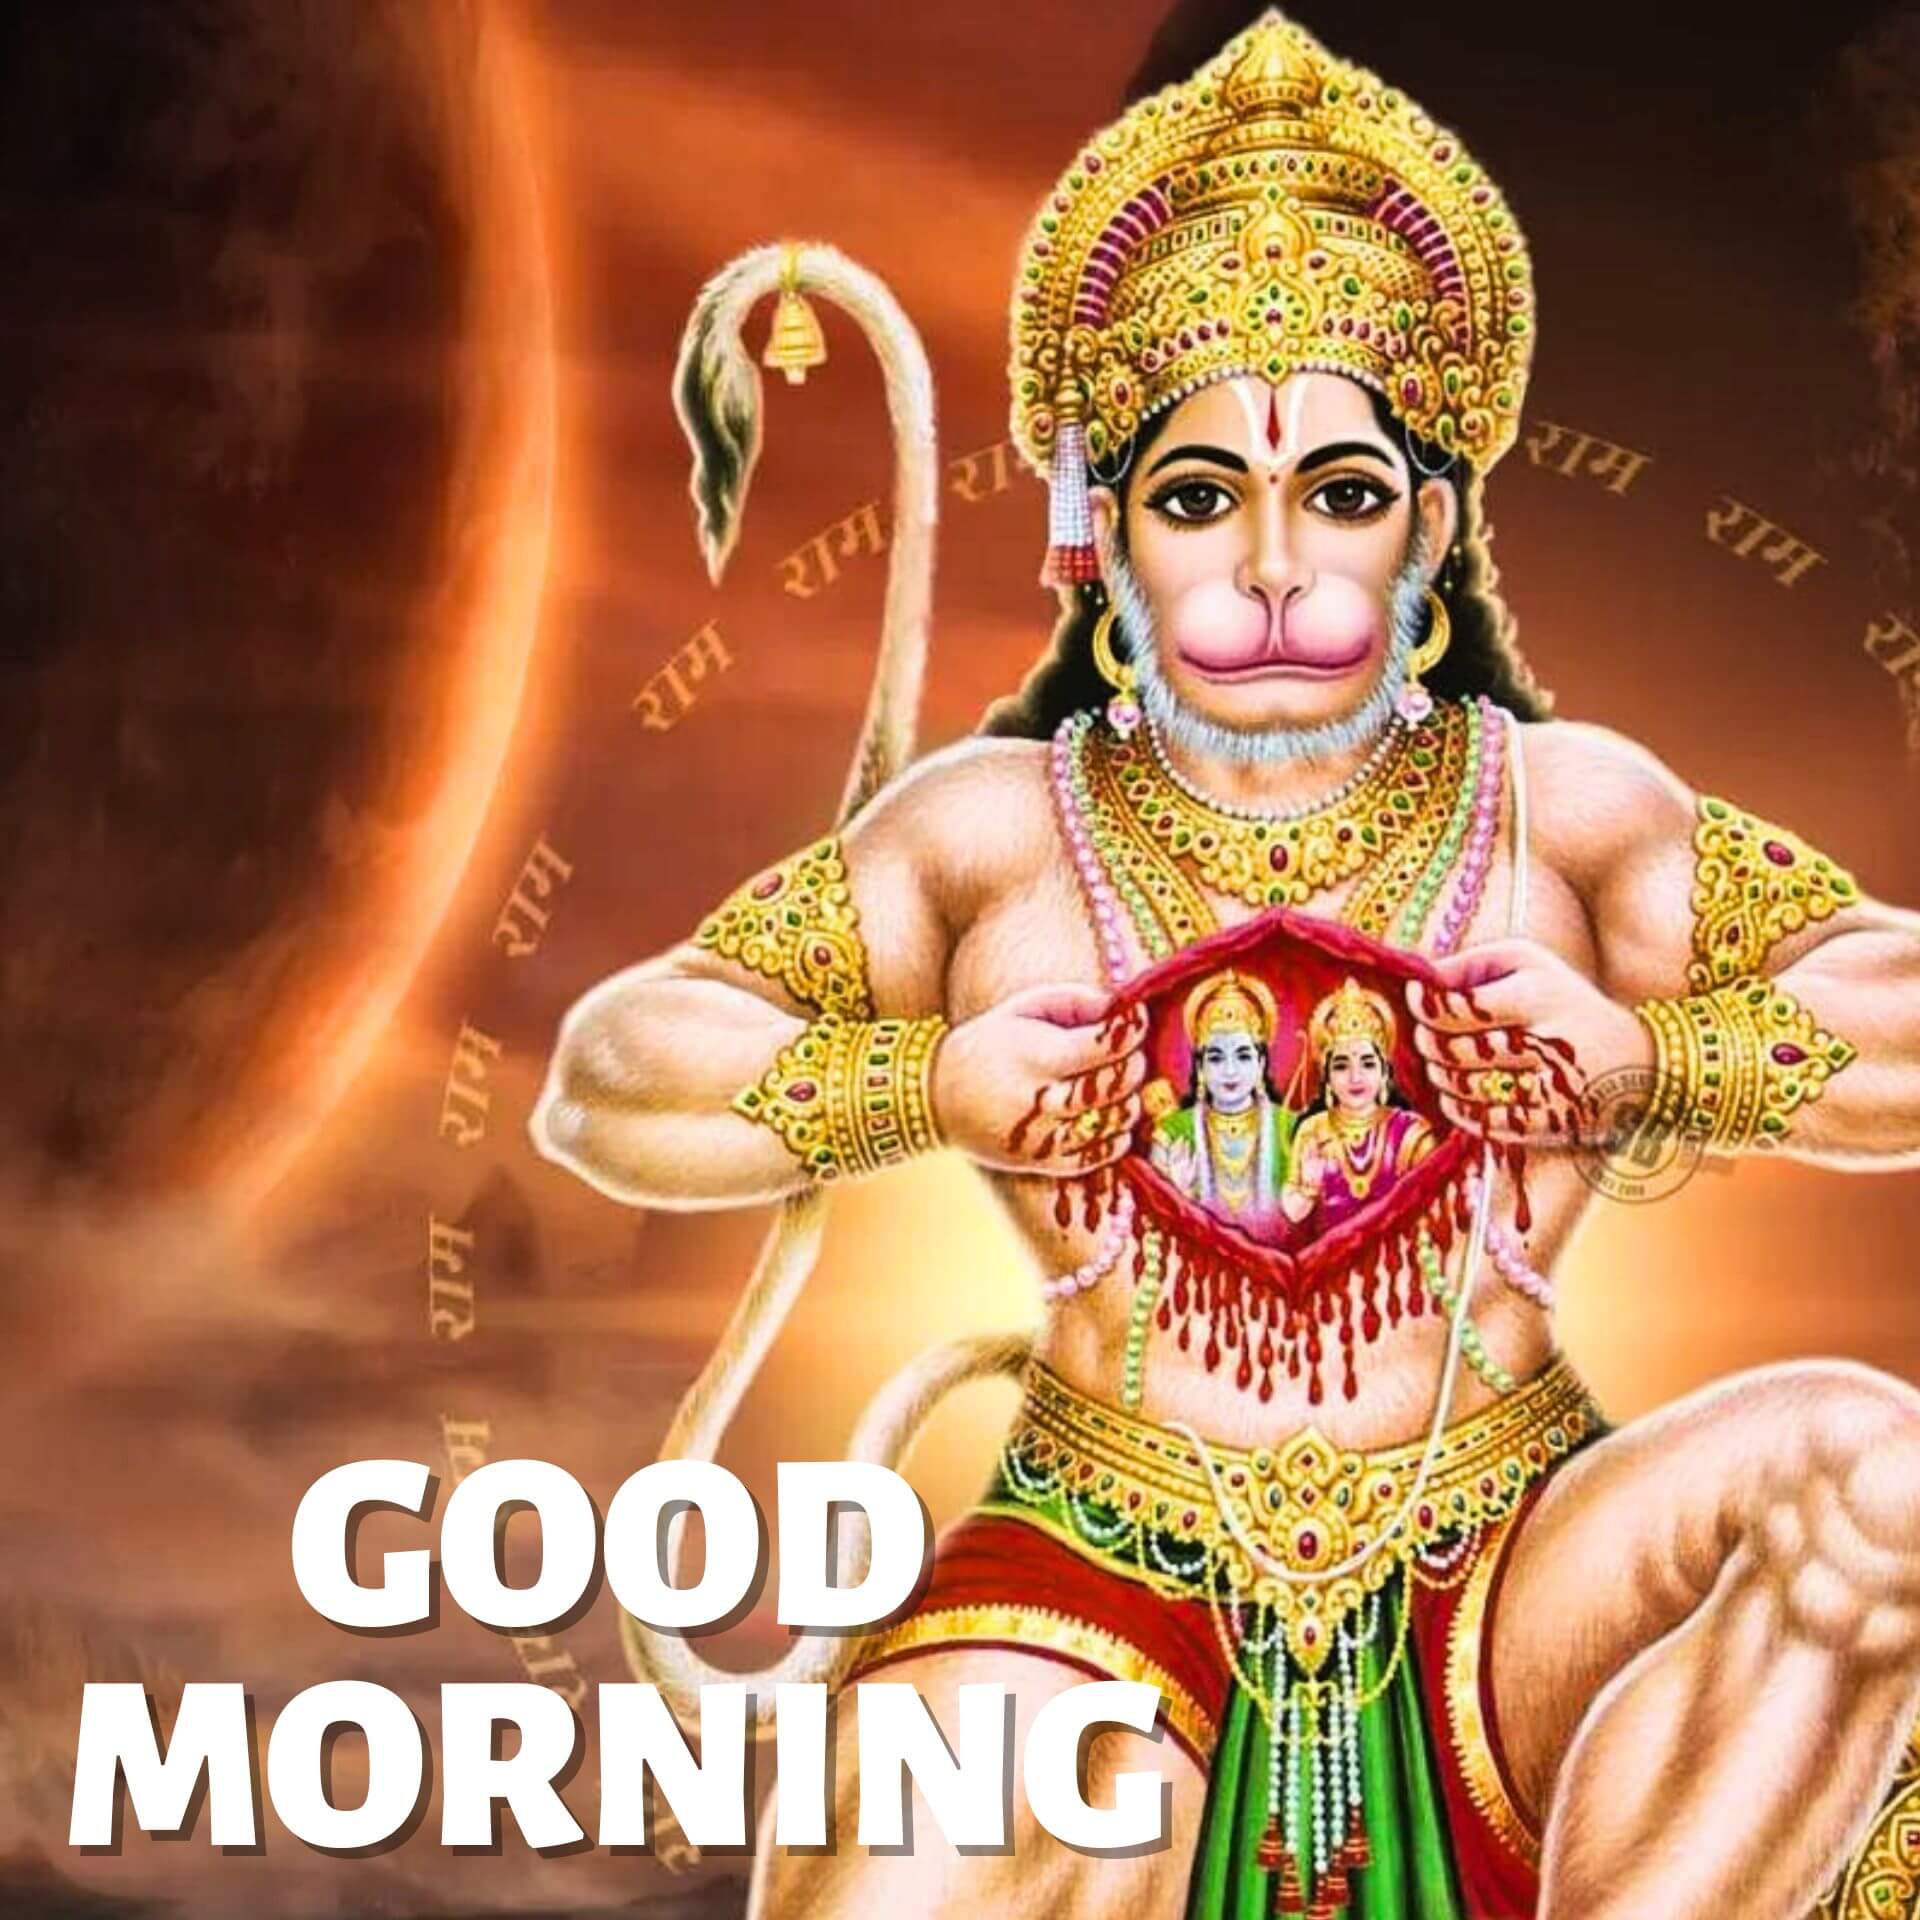 hanuman ji good morning Pics New Download 2